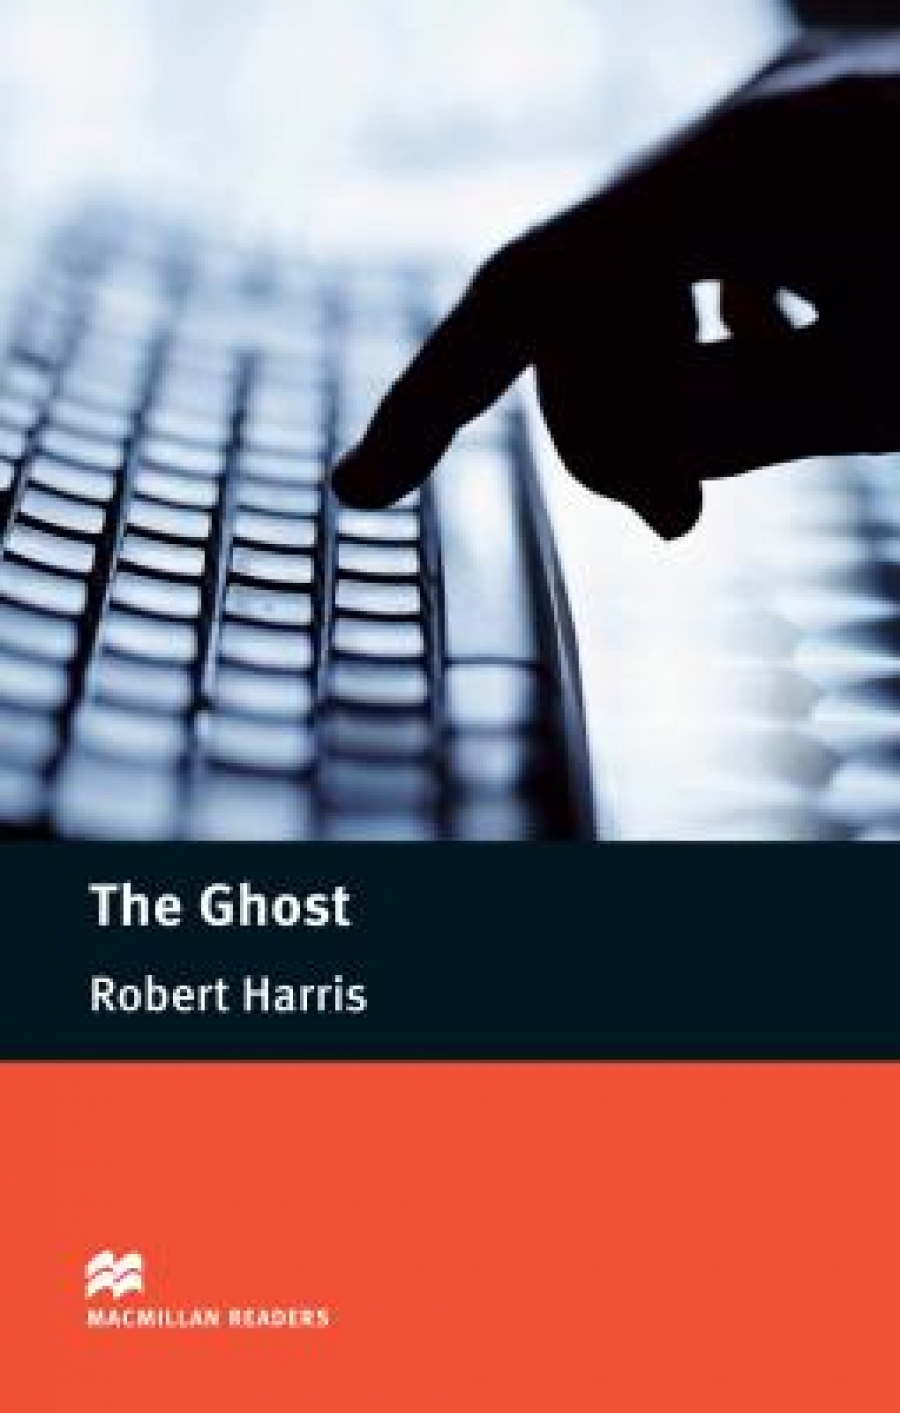 Robert Harris, retold by John Escott The Ghost 